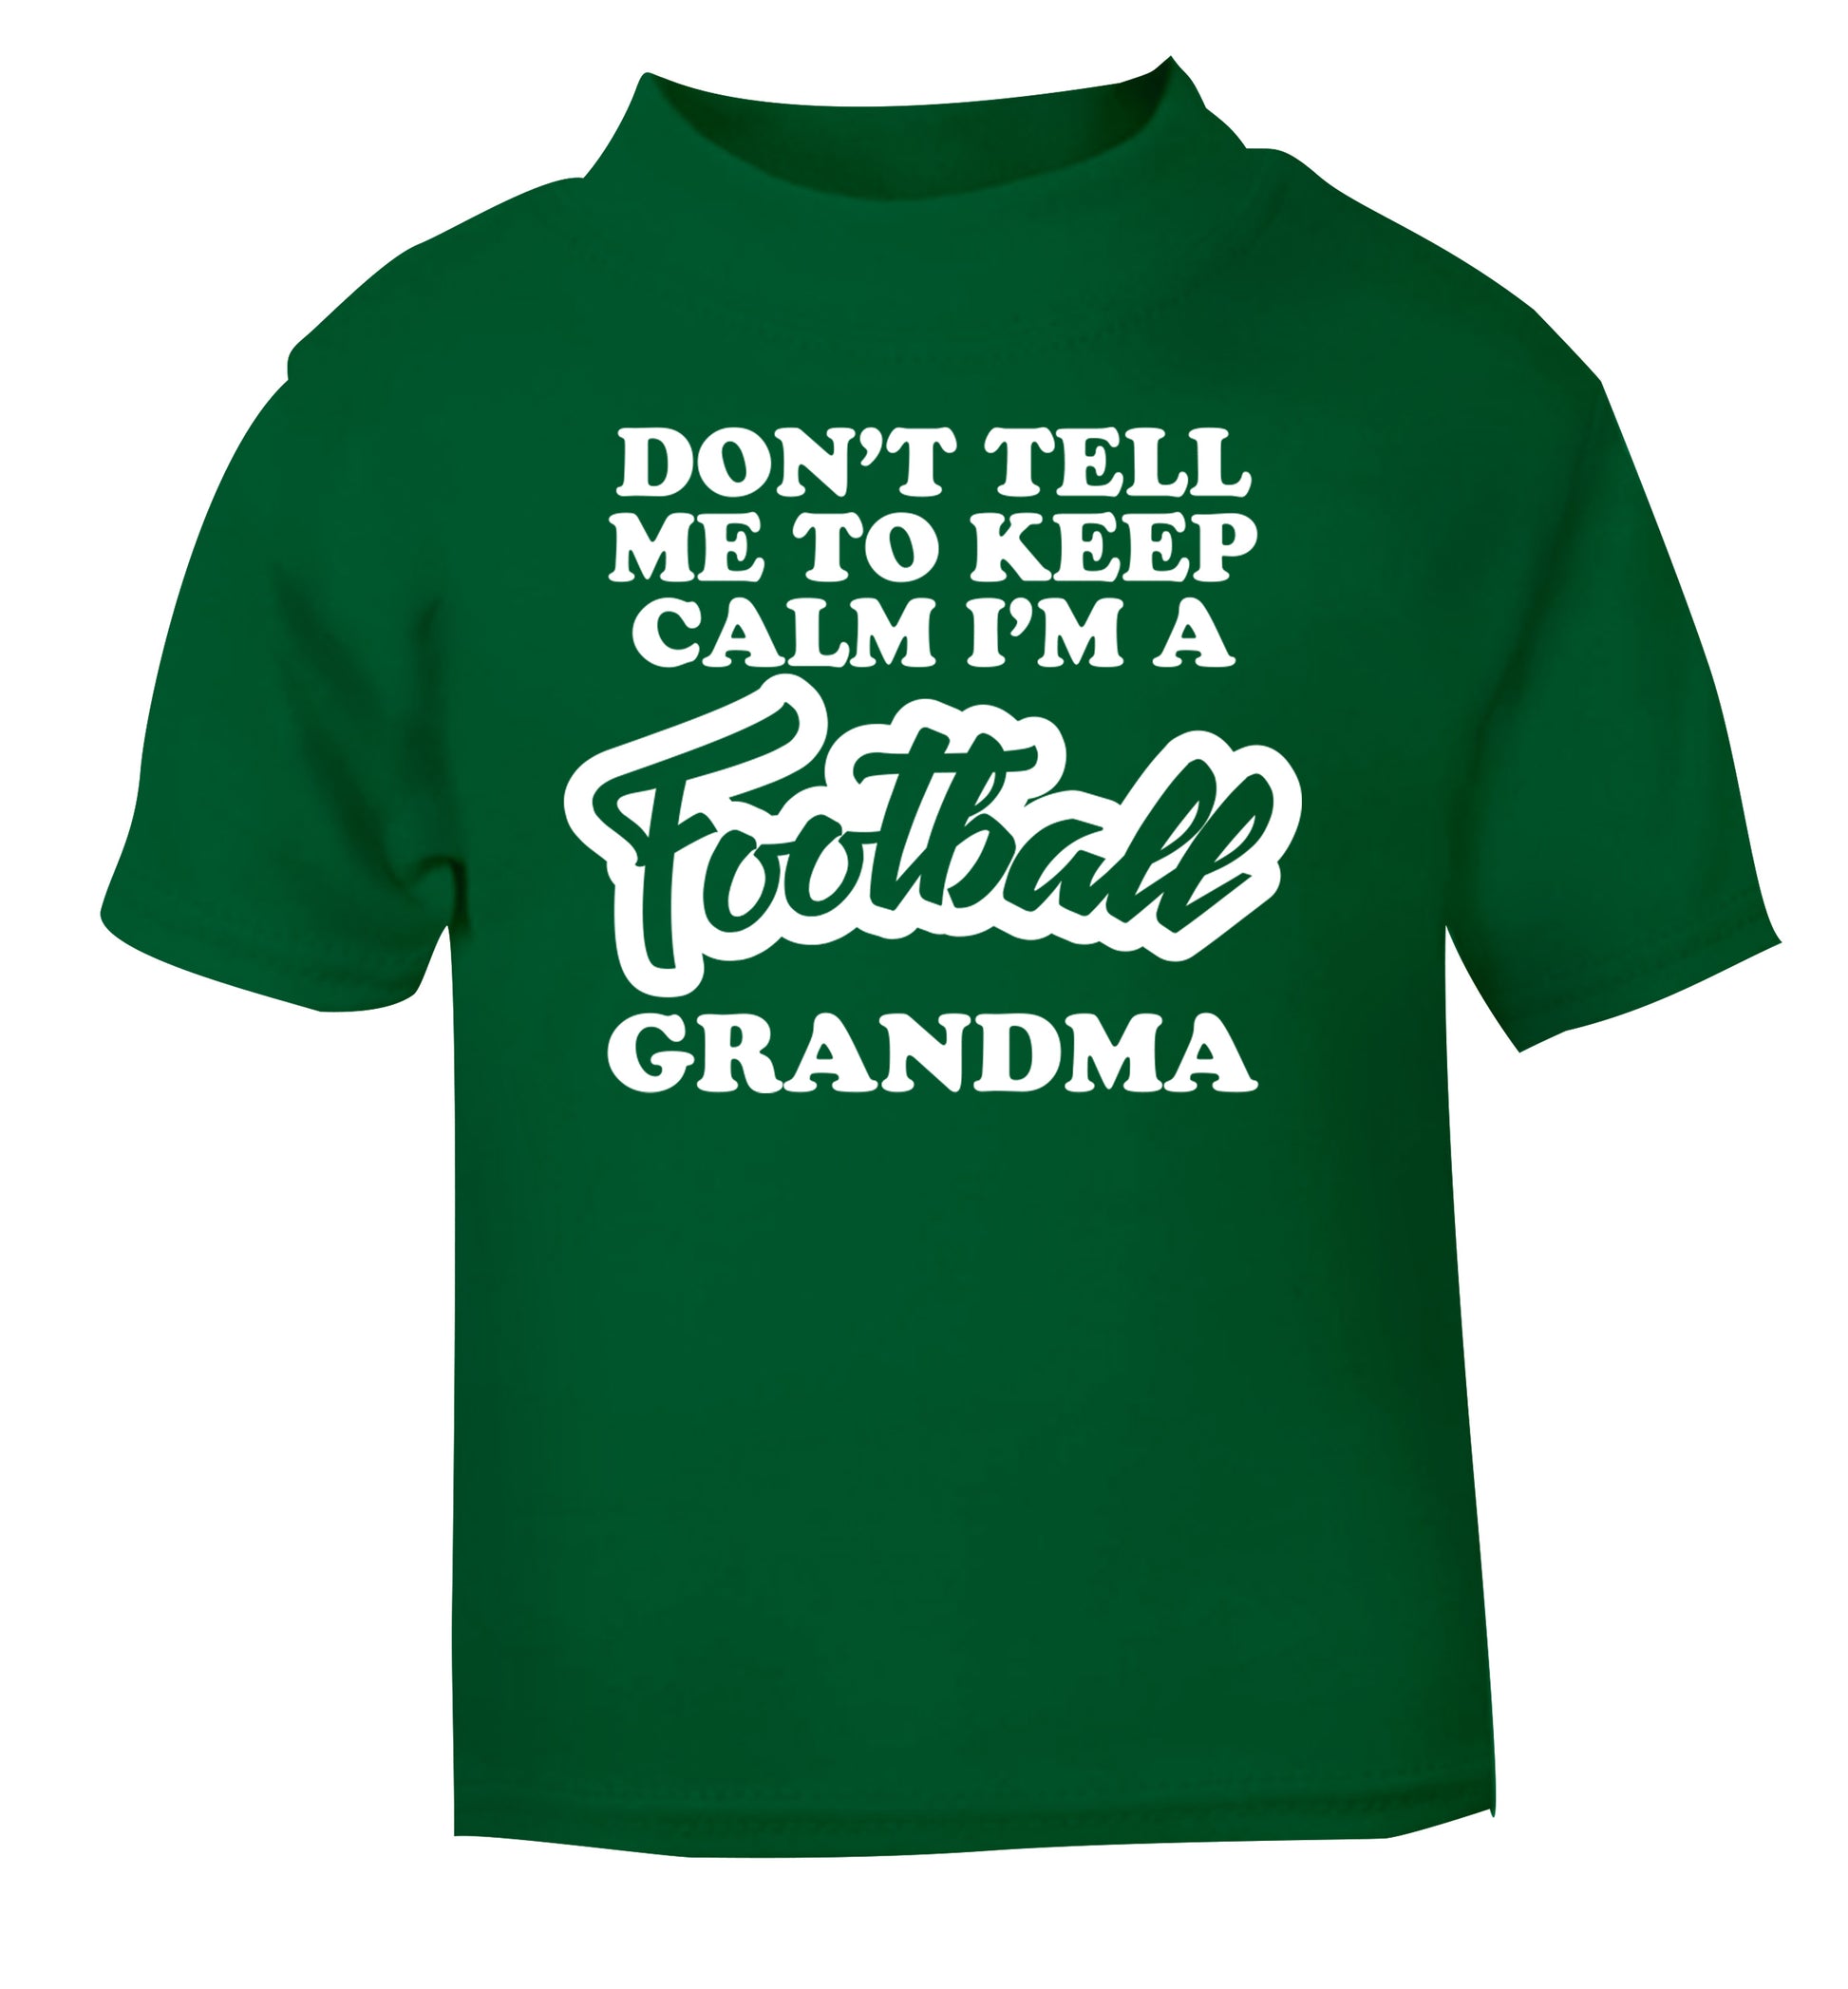 Don't tell me to keep calm I'm a football grandma green Baby Toddler Tshirt 2 Years